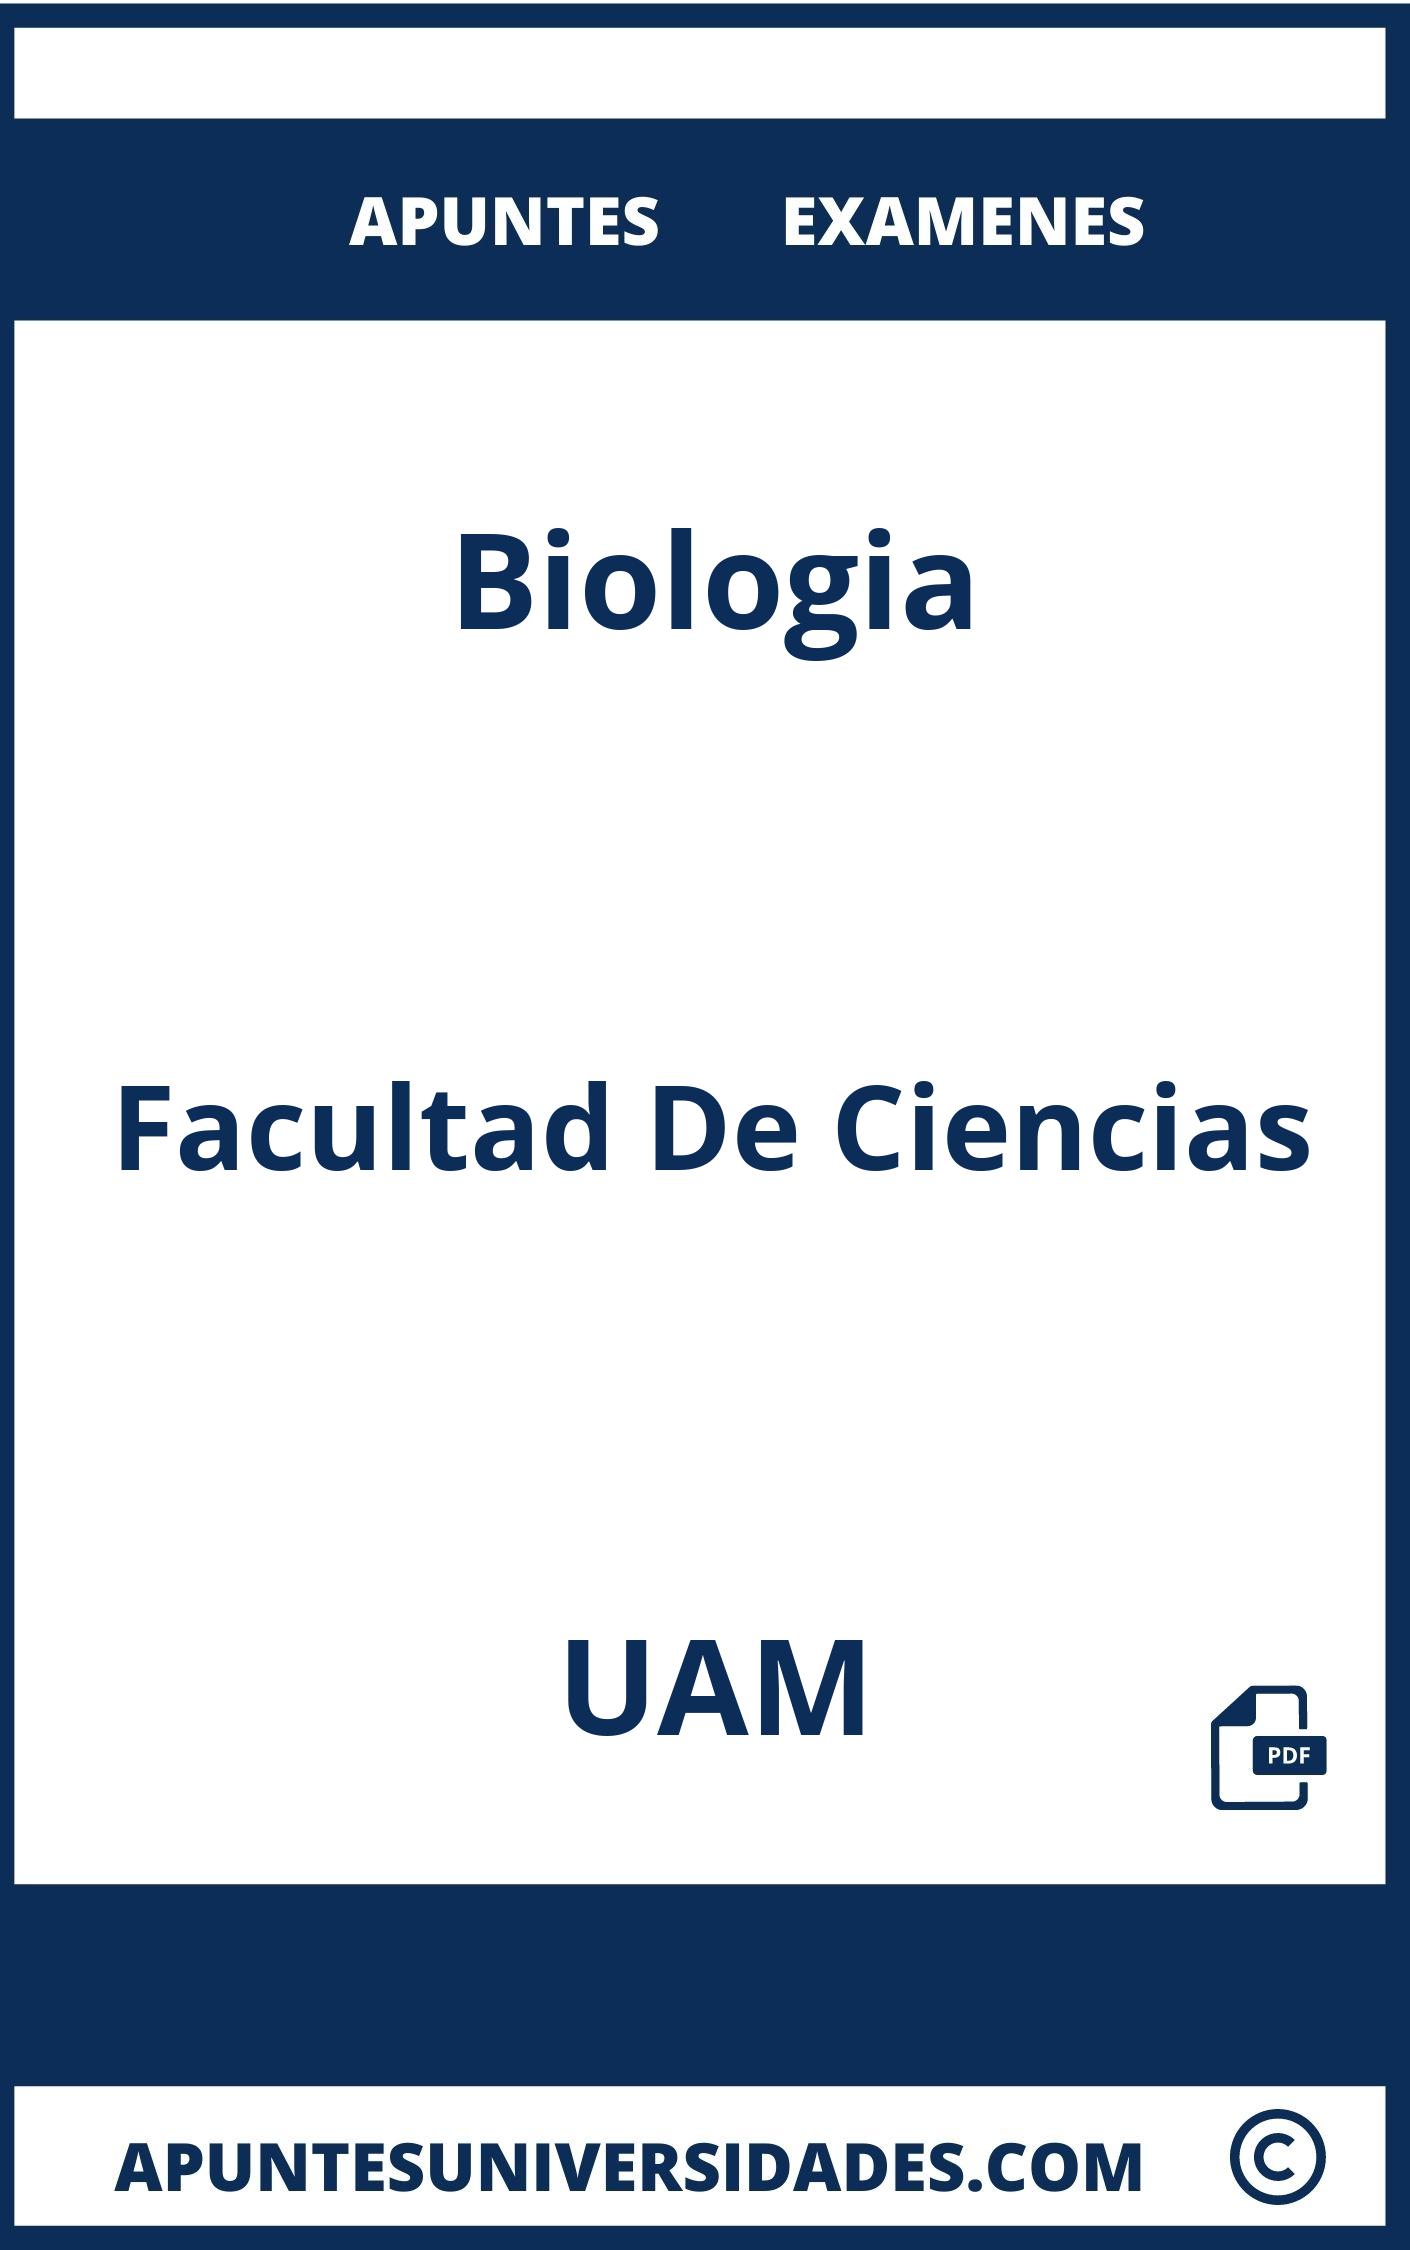 Examenes Biologia UAM y Apuntes